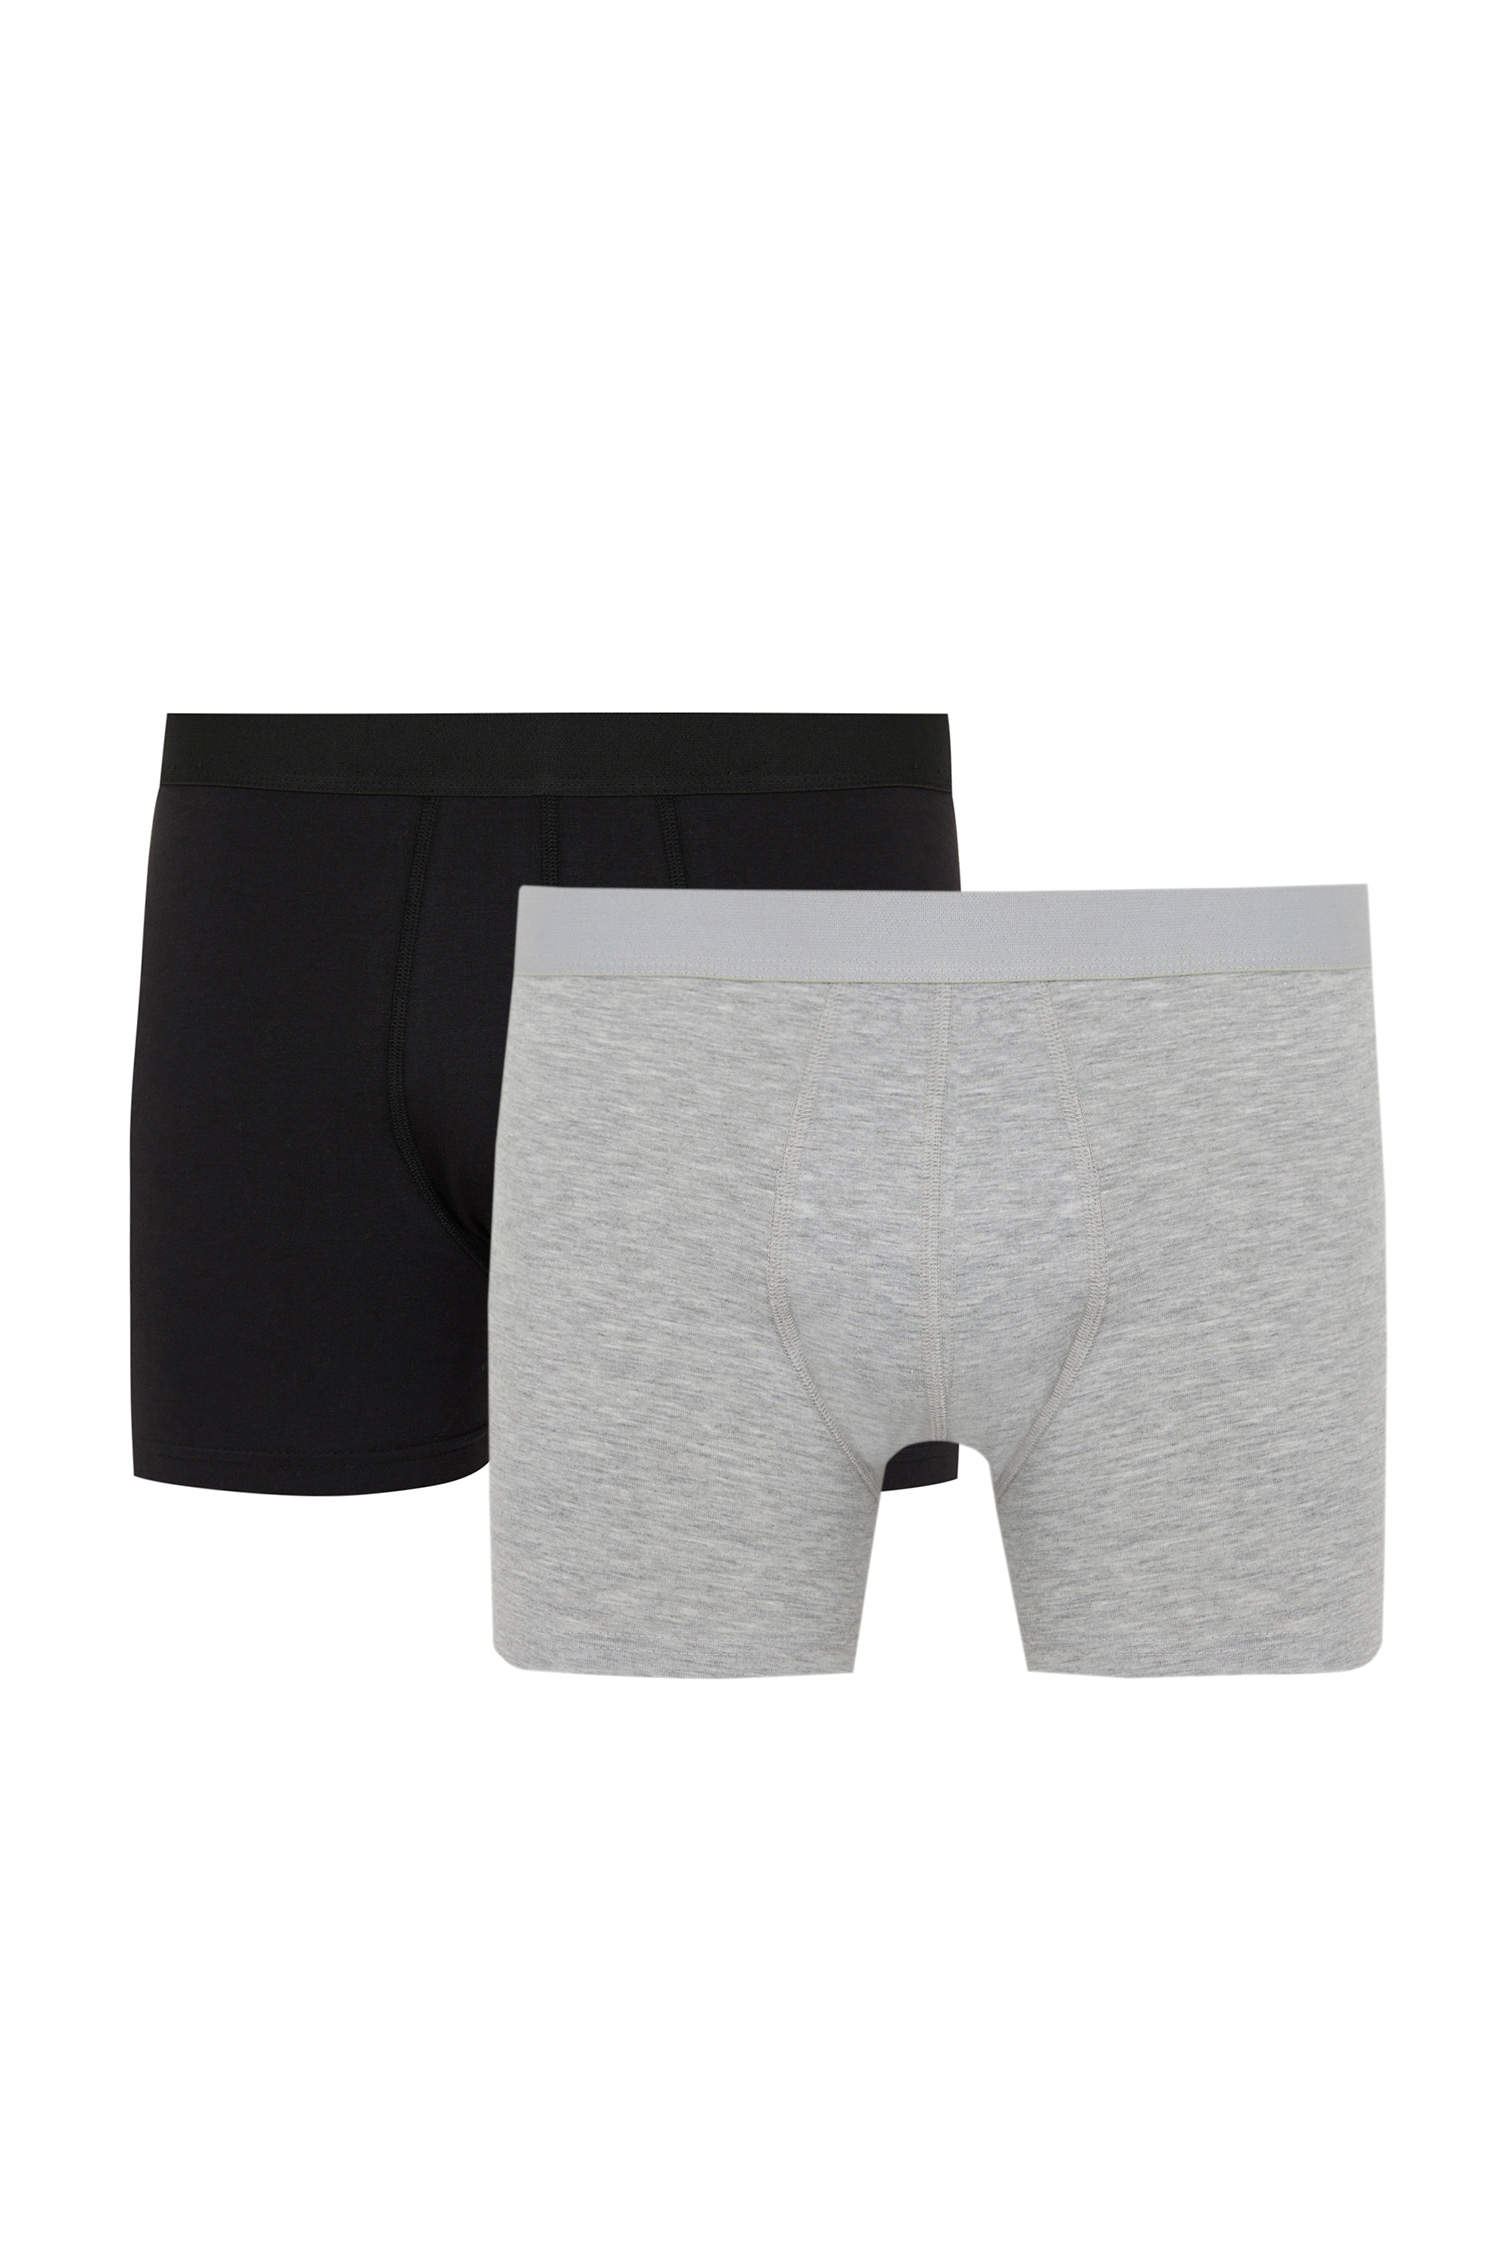 Black Boxer Brief underpants 7-Pack - Bread & Boxers